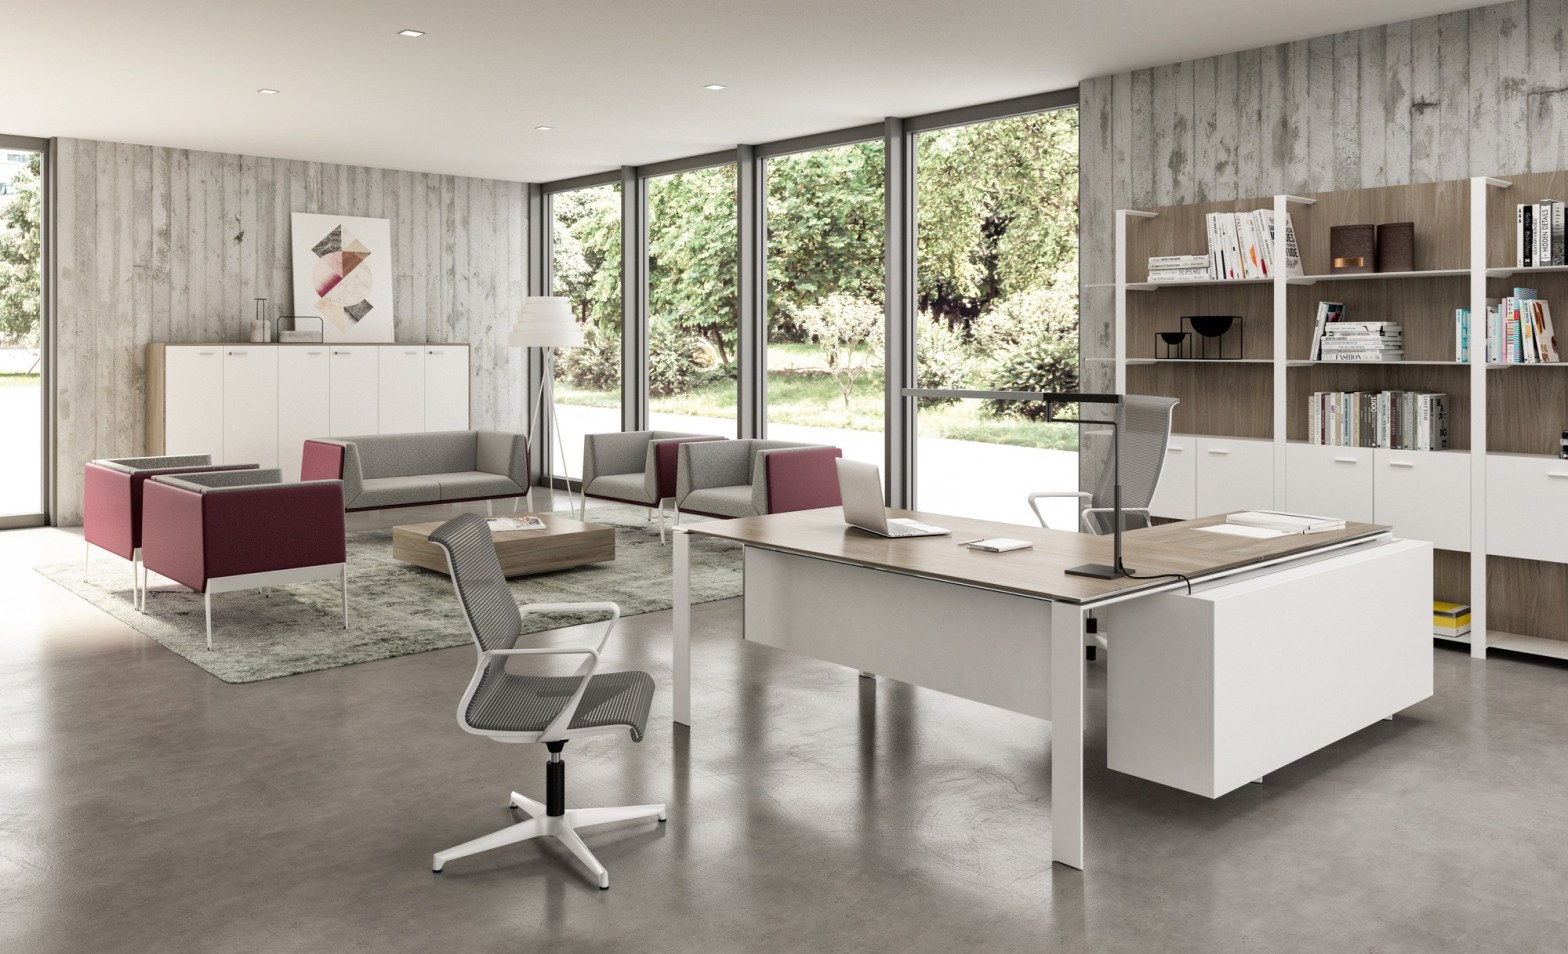 Modular office furniture manufacturers